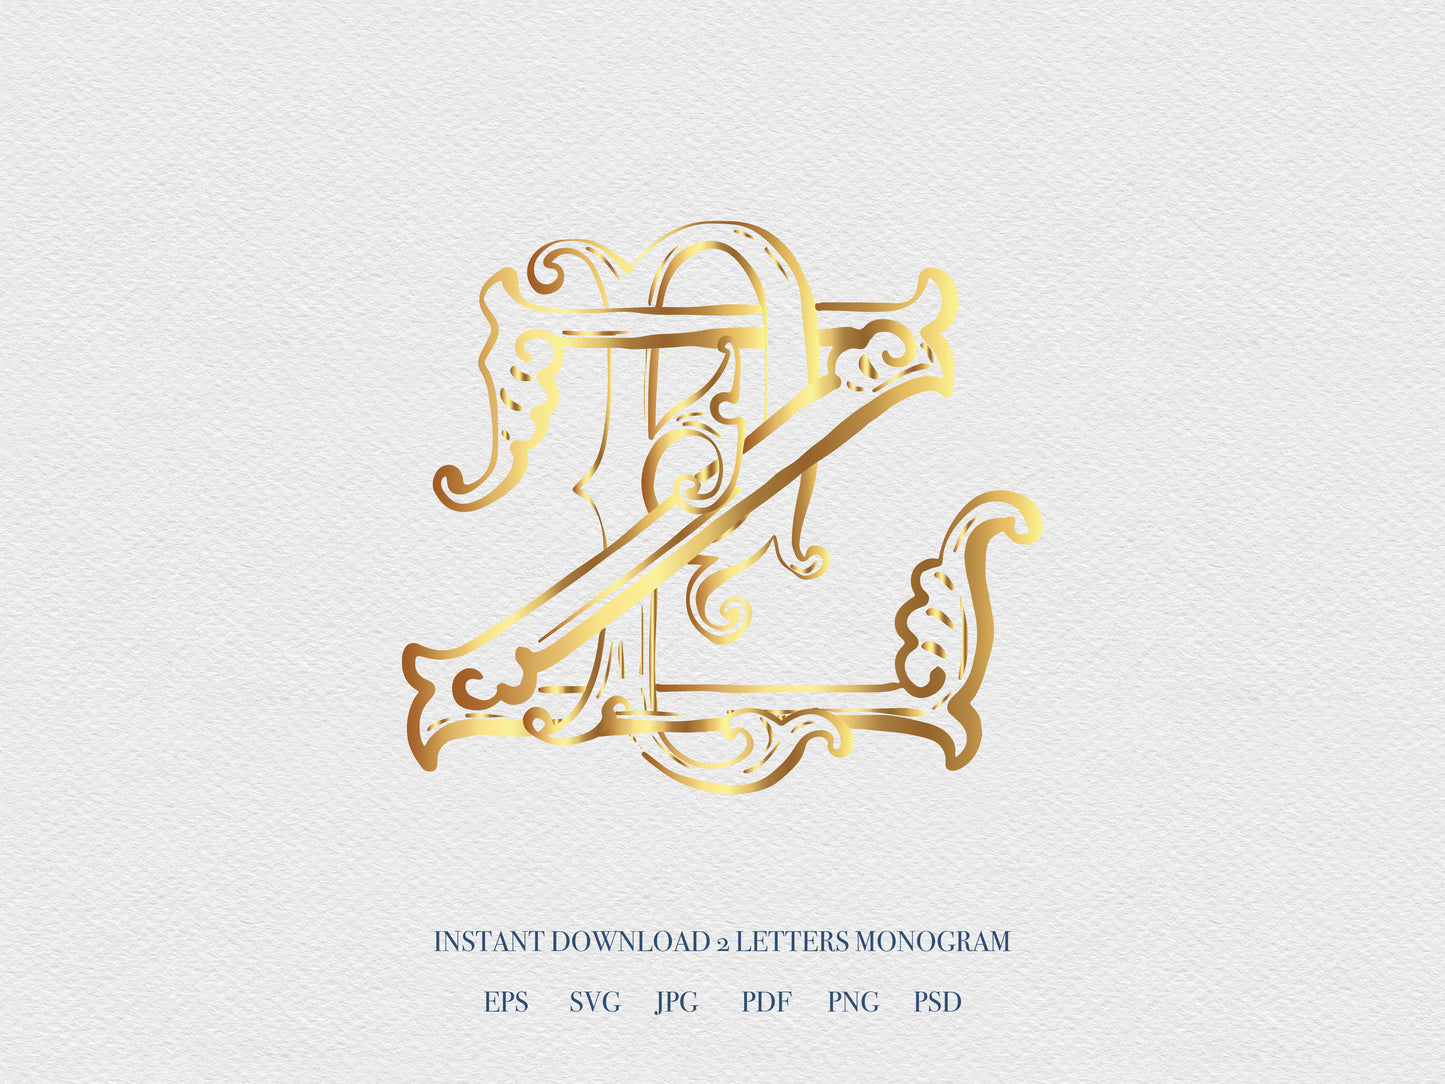 2 Letter Monogram with Letters PZ ZP | Digital Download - Wedding Monogram SVG, Personal Logo, Wedding Logo for Wedding Invitations The Wedding Crest Lab